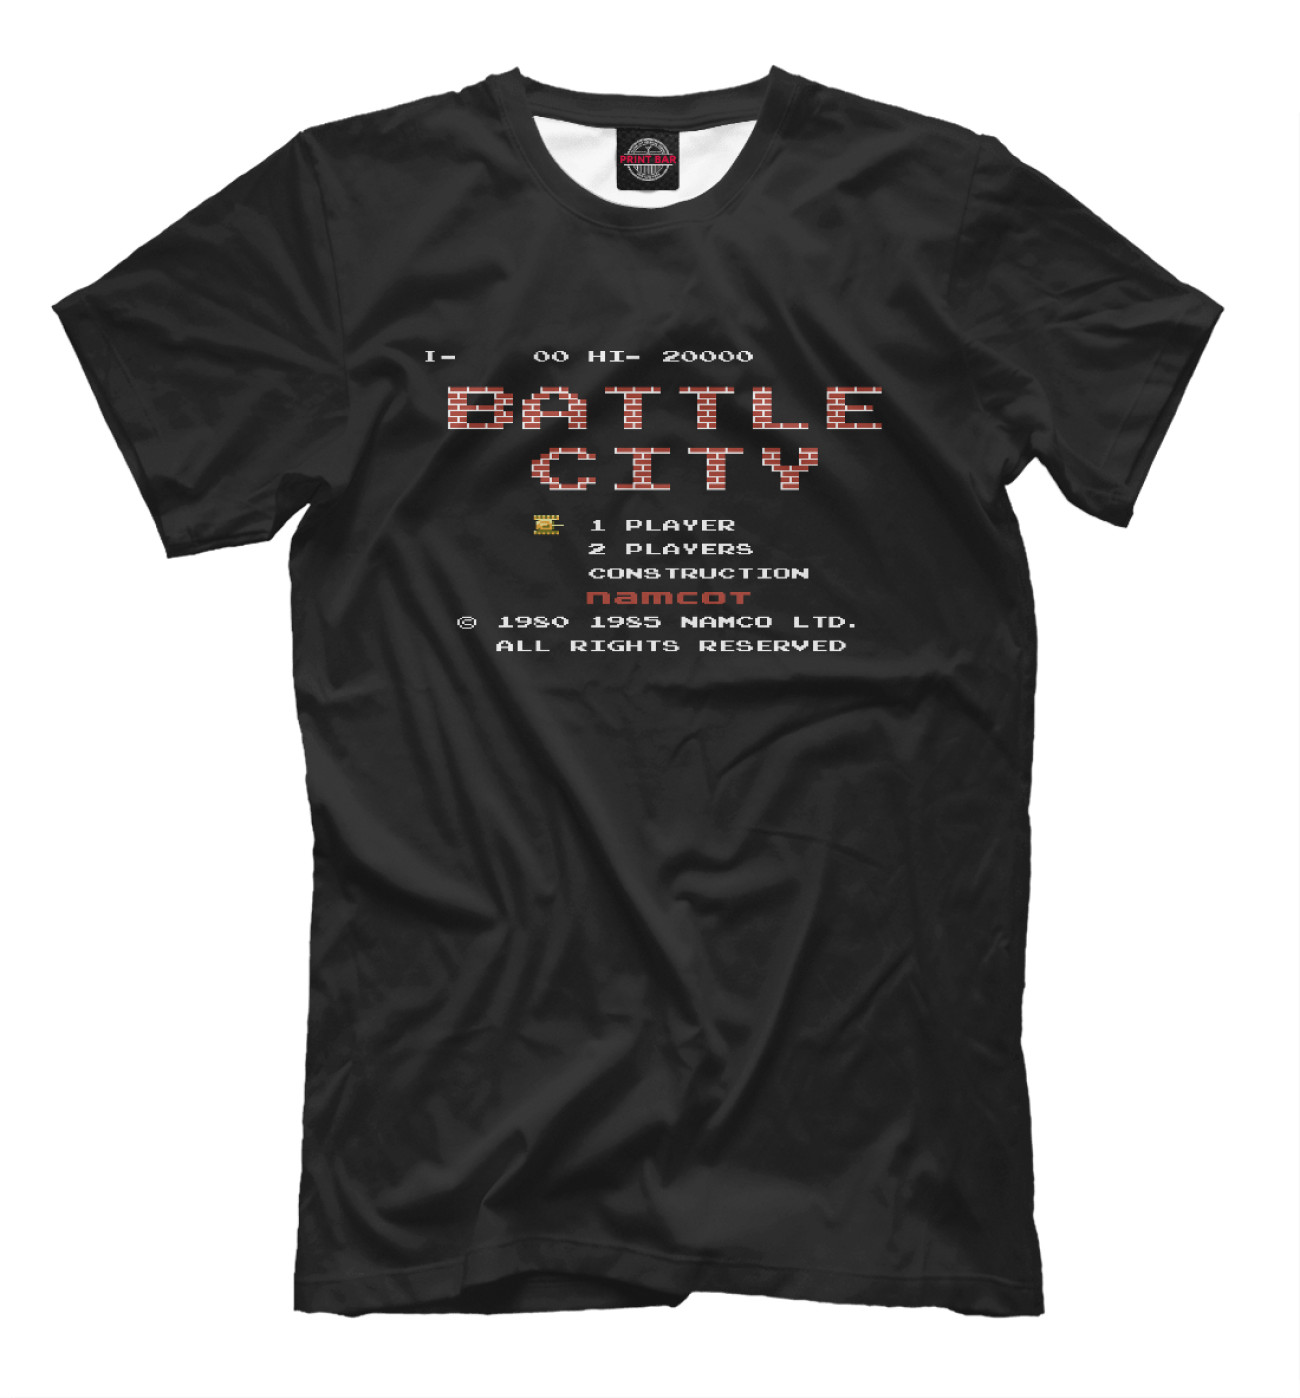 Мужская Футболка Battle City, артикул: DEN-671707-fut-2